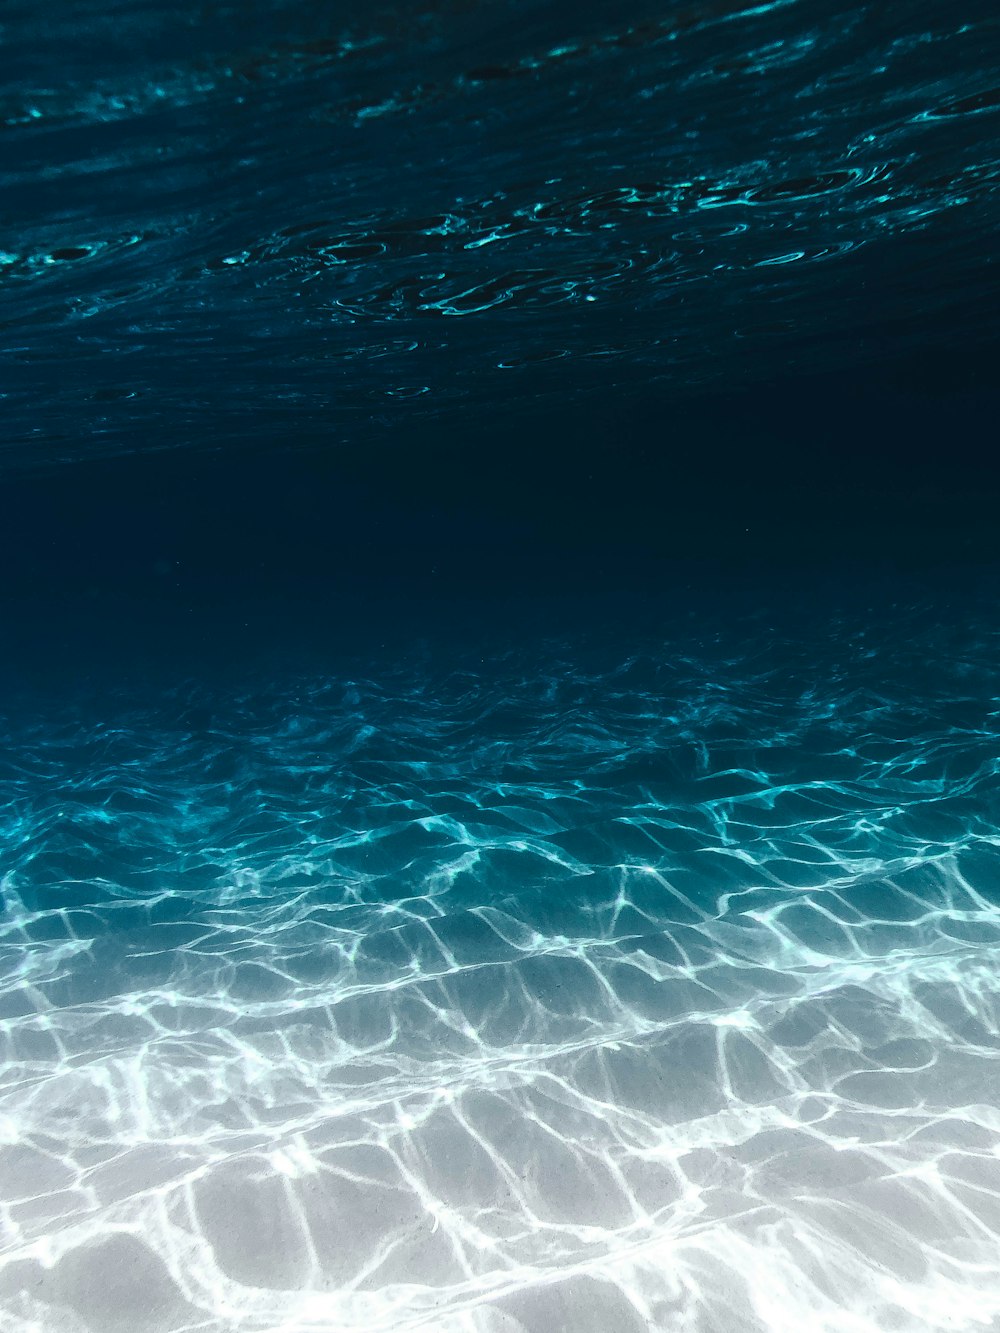 sabbia grigia sotto l'acqua limpida blu